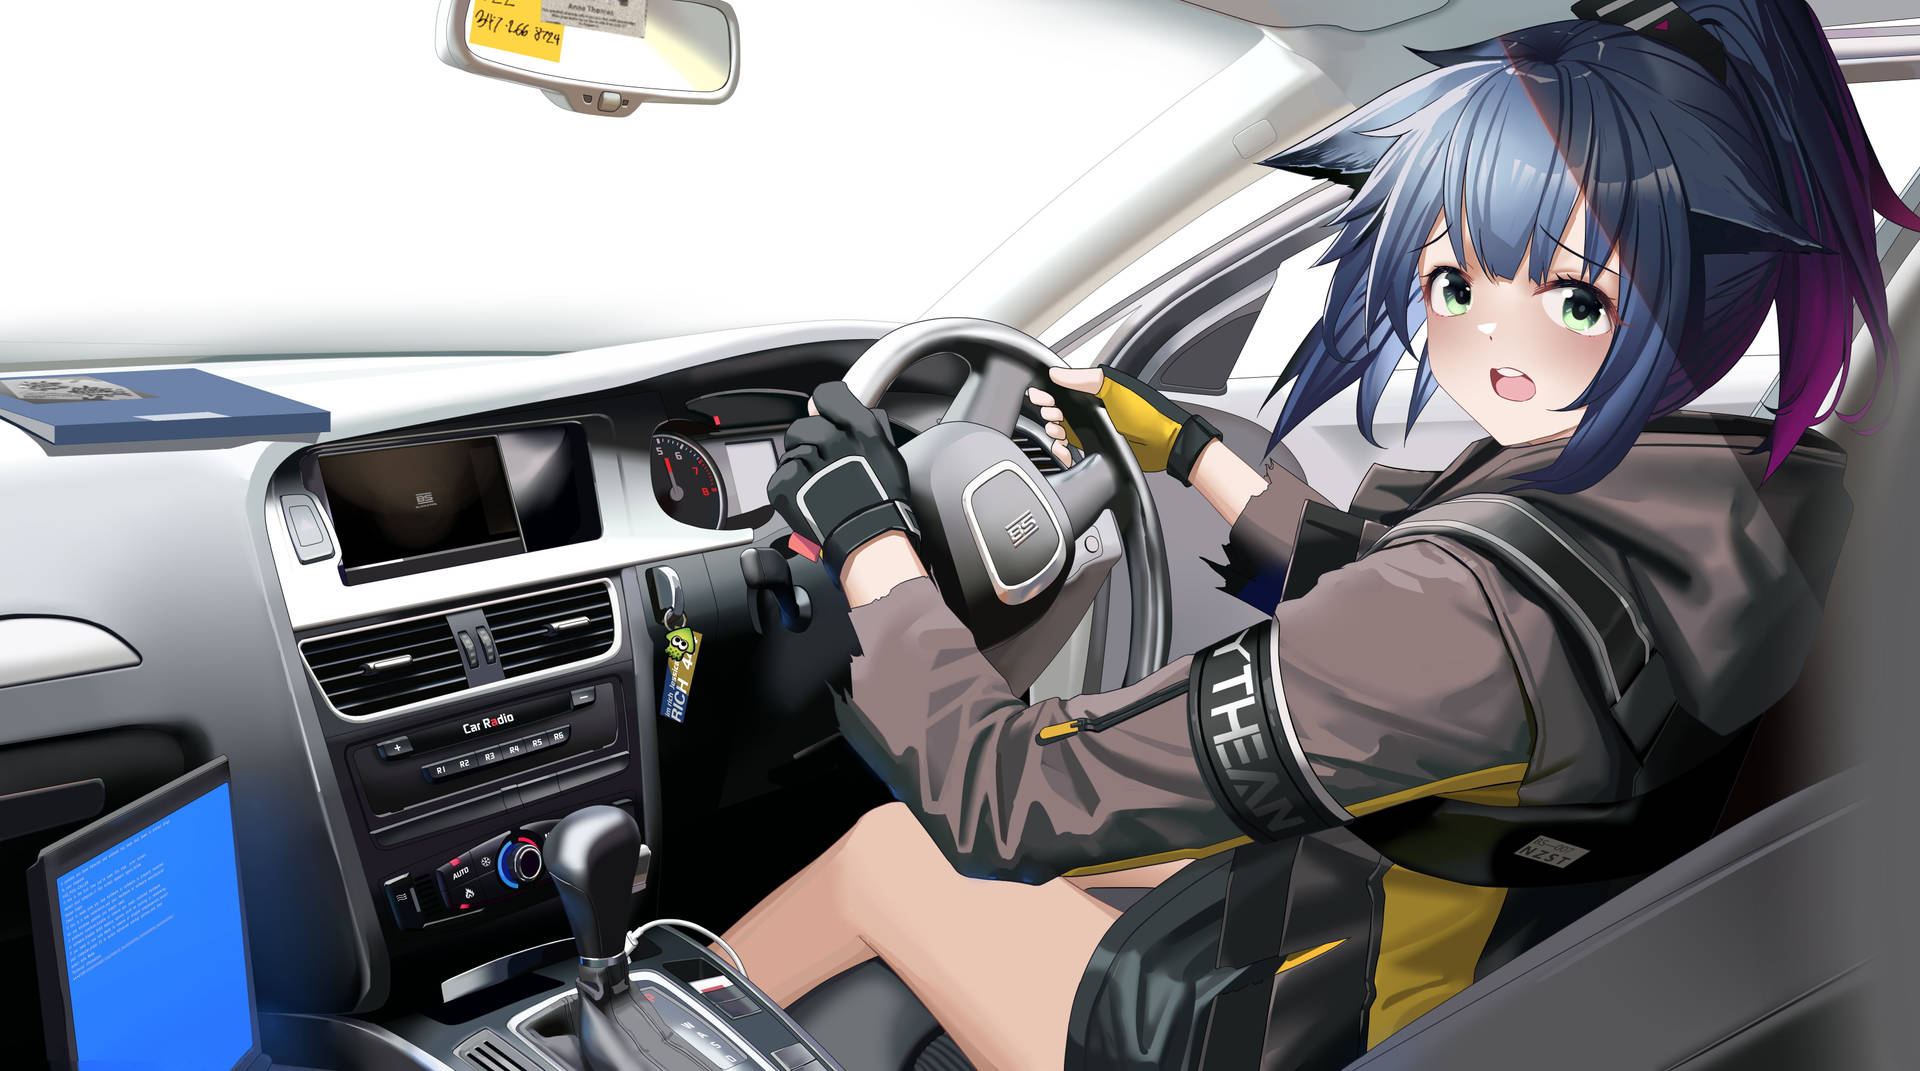 Tomboy Anime Girl In A Car Wallpaper